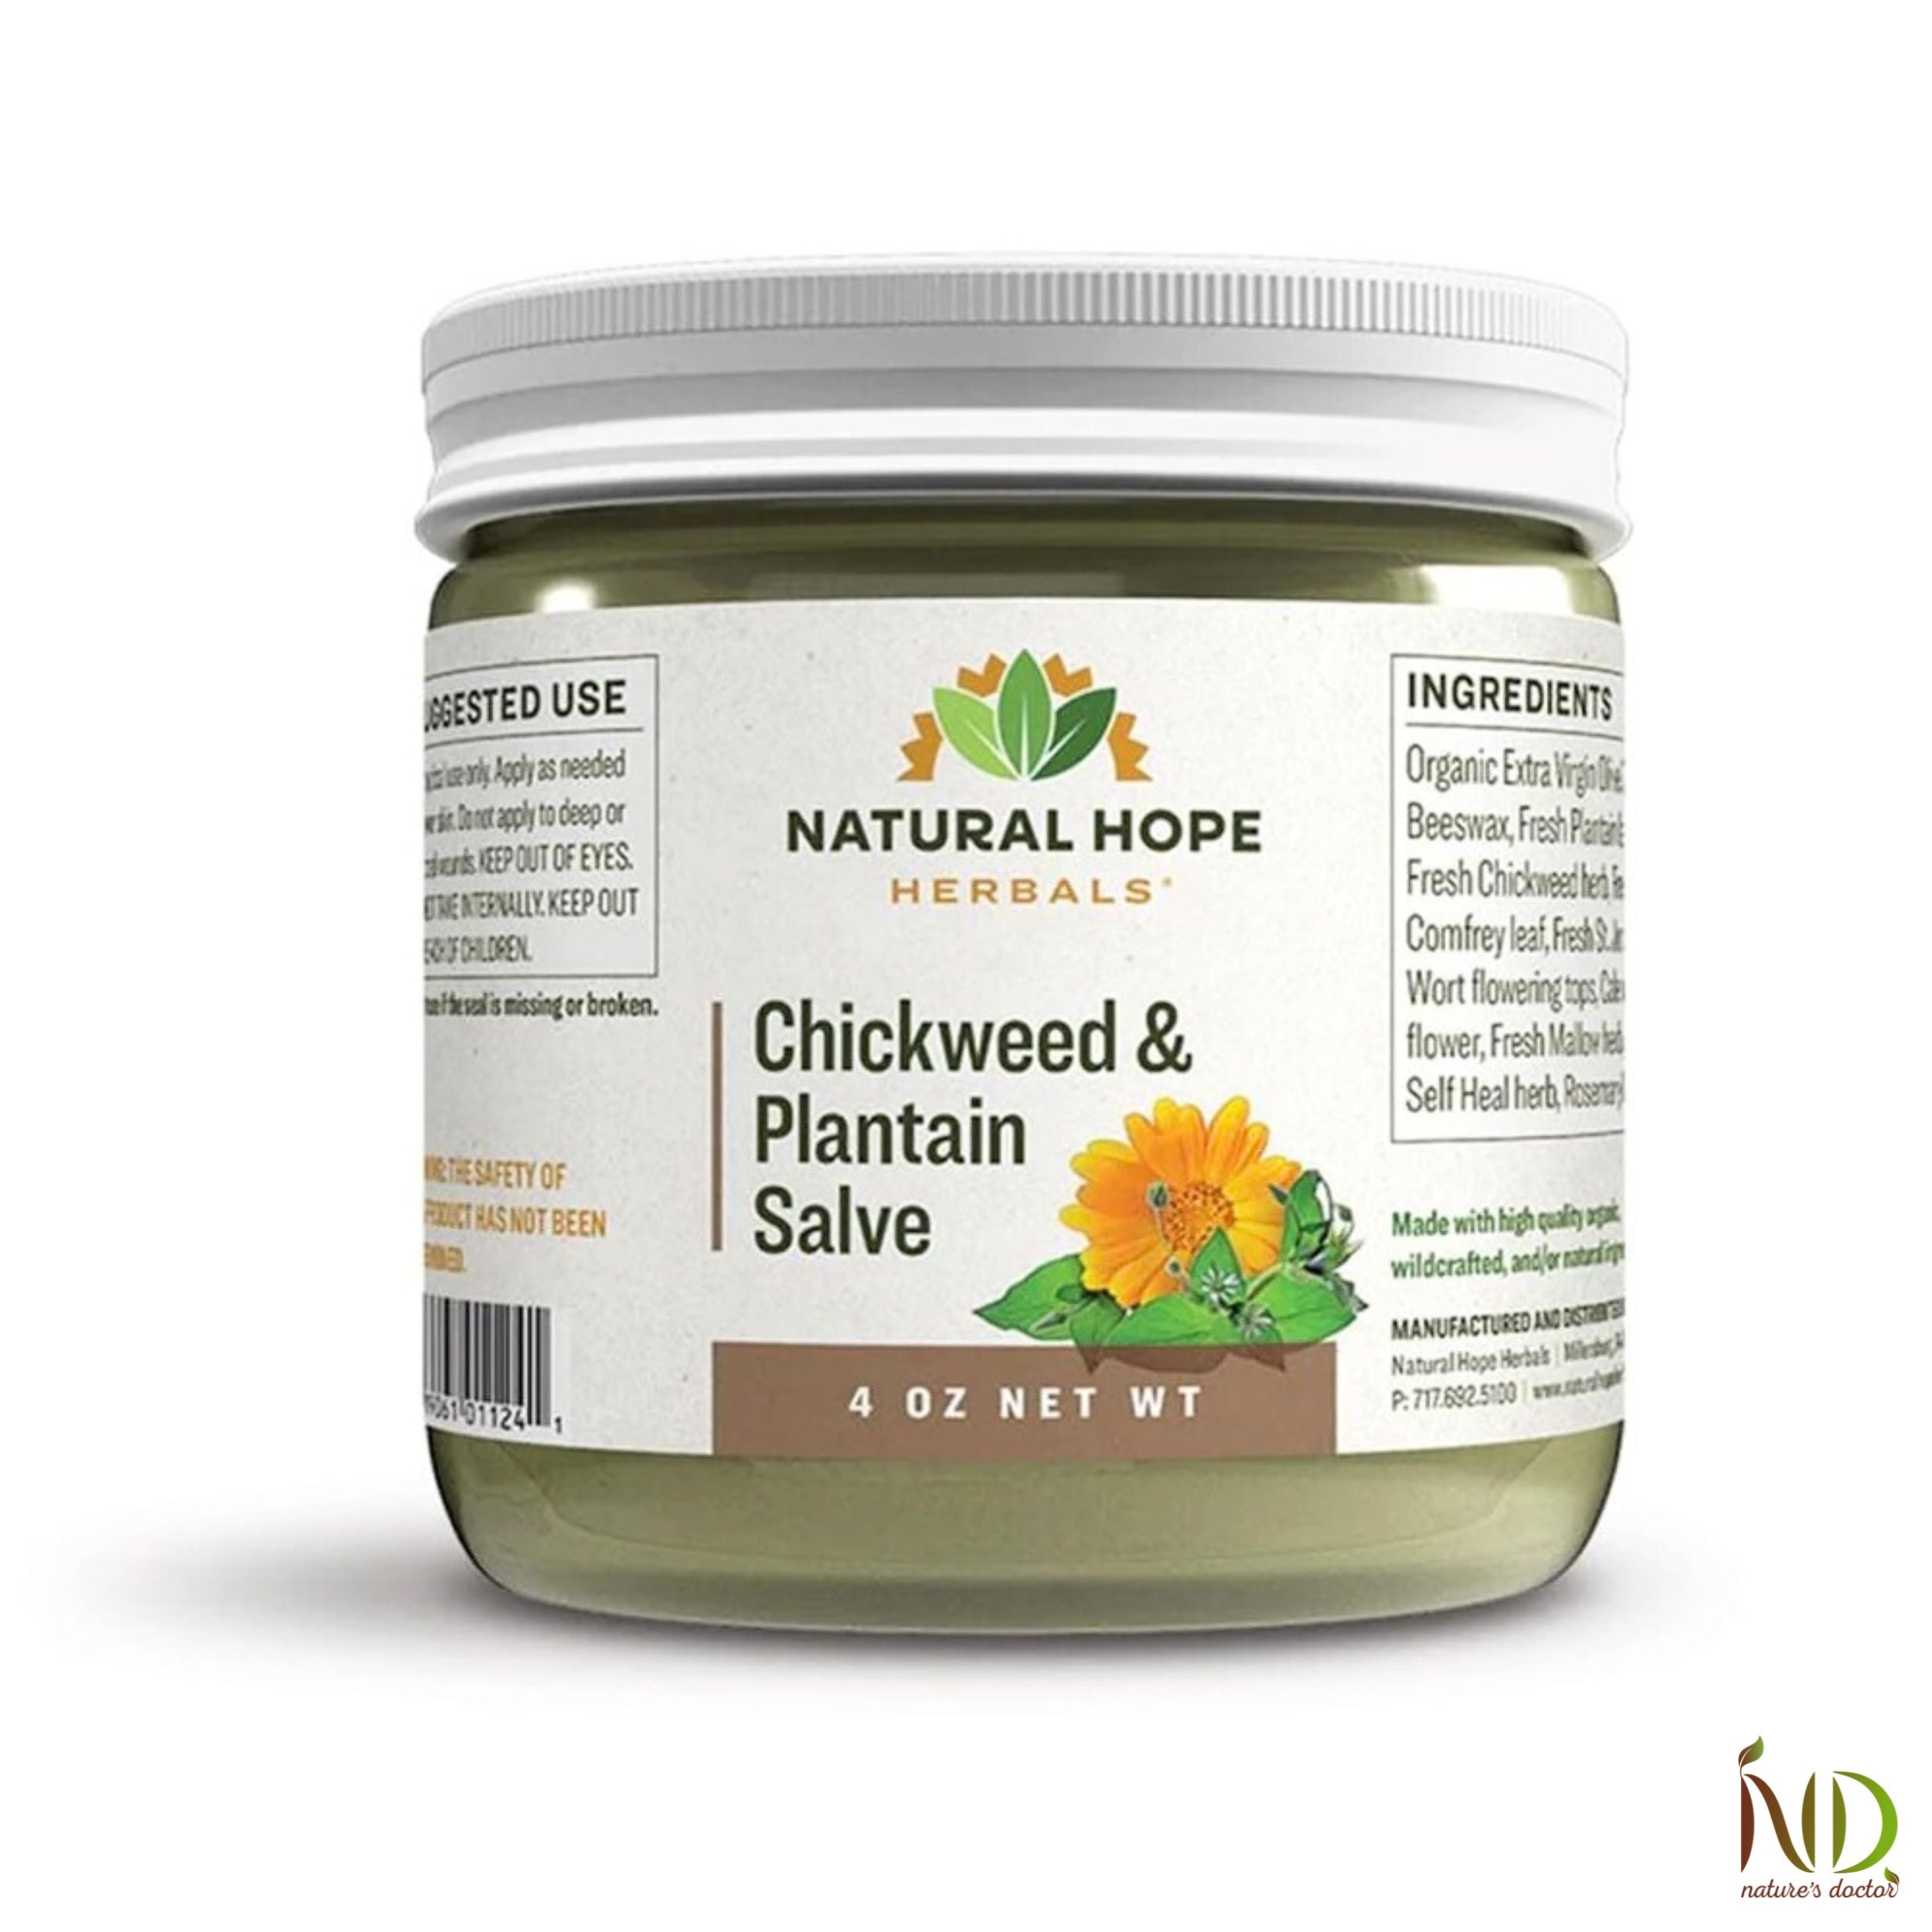 Chickweed & Plantain Salve - Natural Hope Herbals